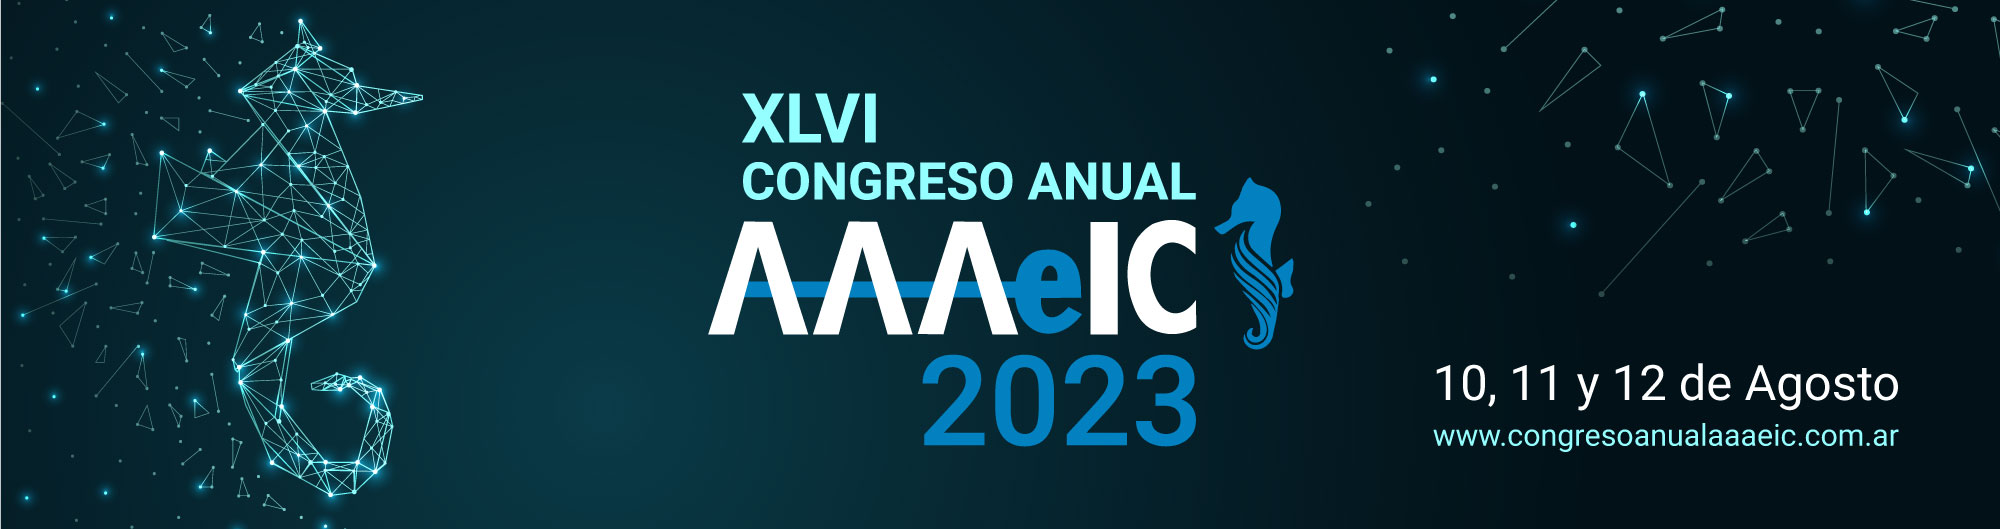 Congreso Anual AAAeIC 2023